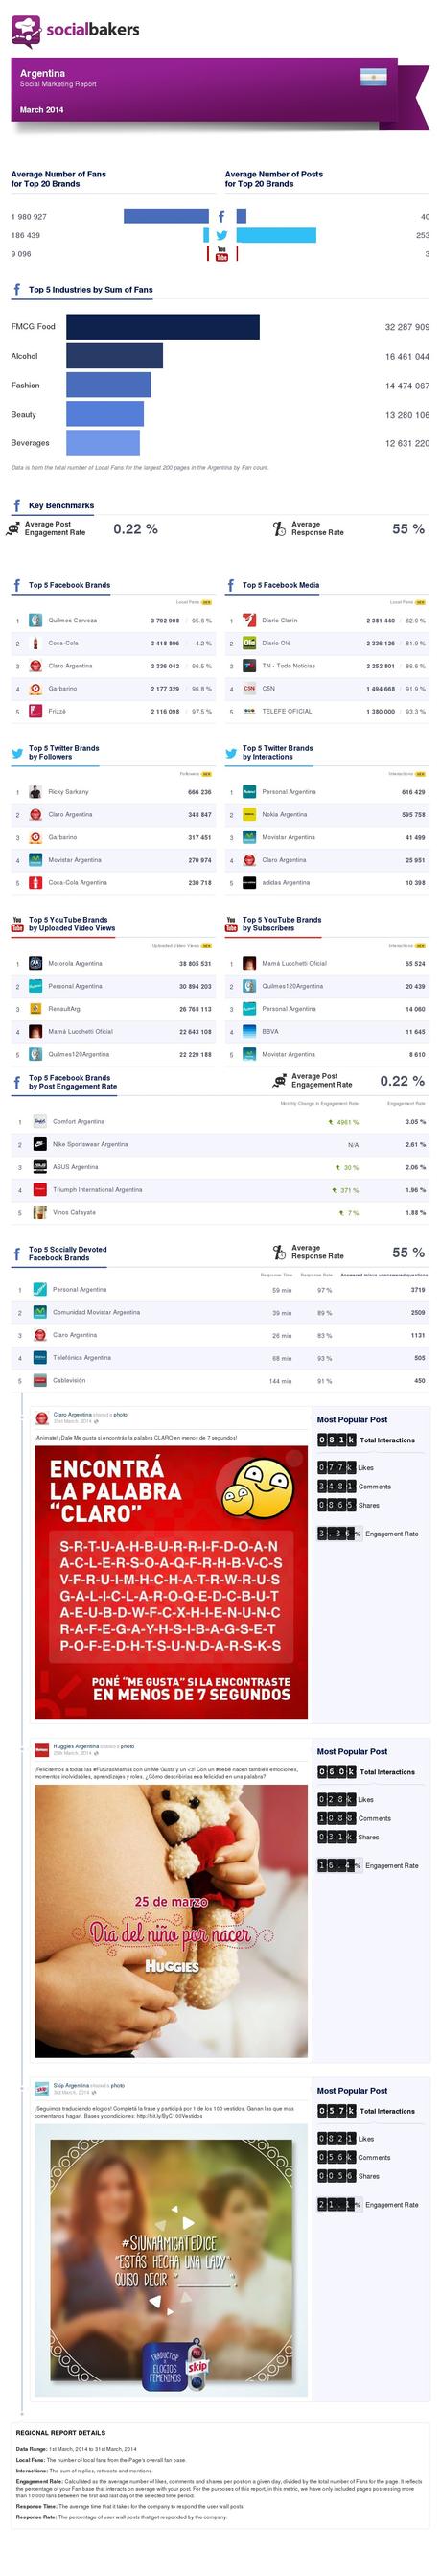 Informe Marketing Social – Argentina, Marzo 2014